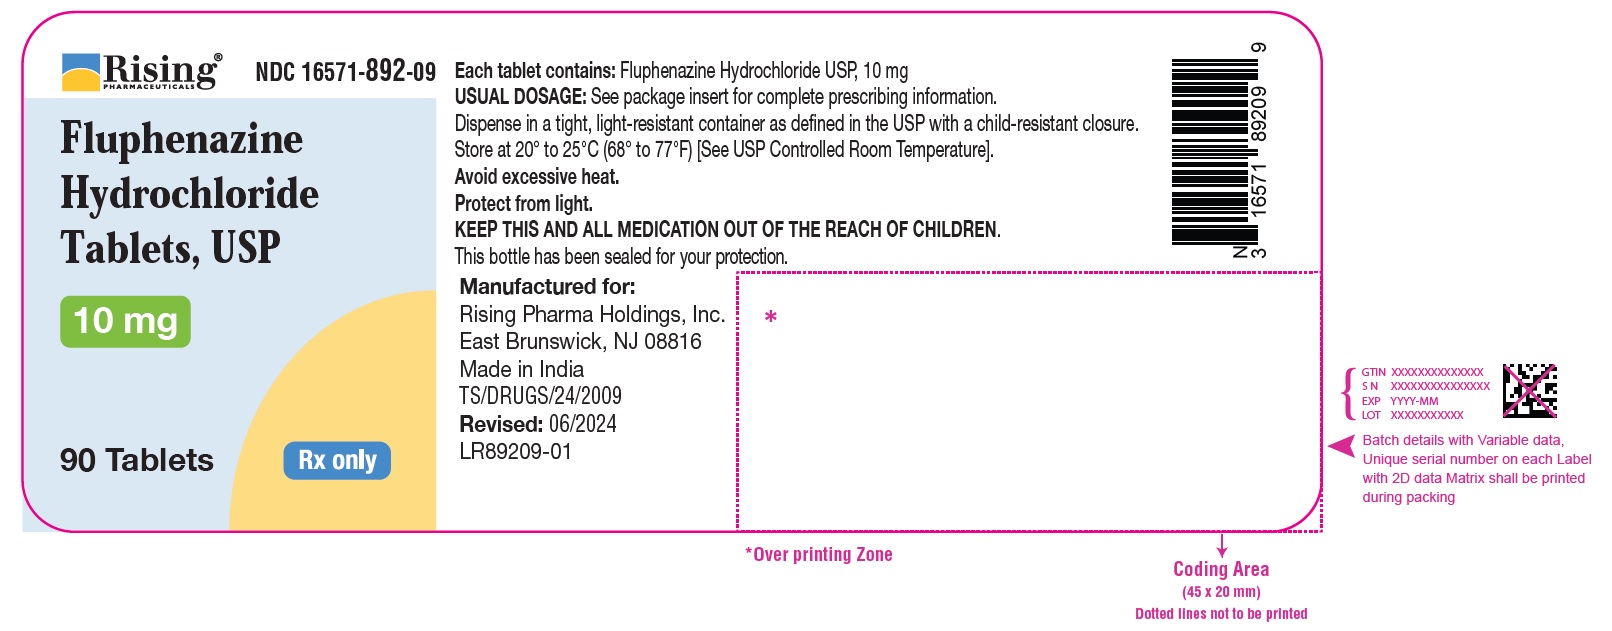 fluphenazine-hydrochloride-label4.jpg